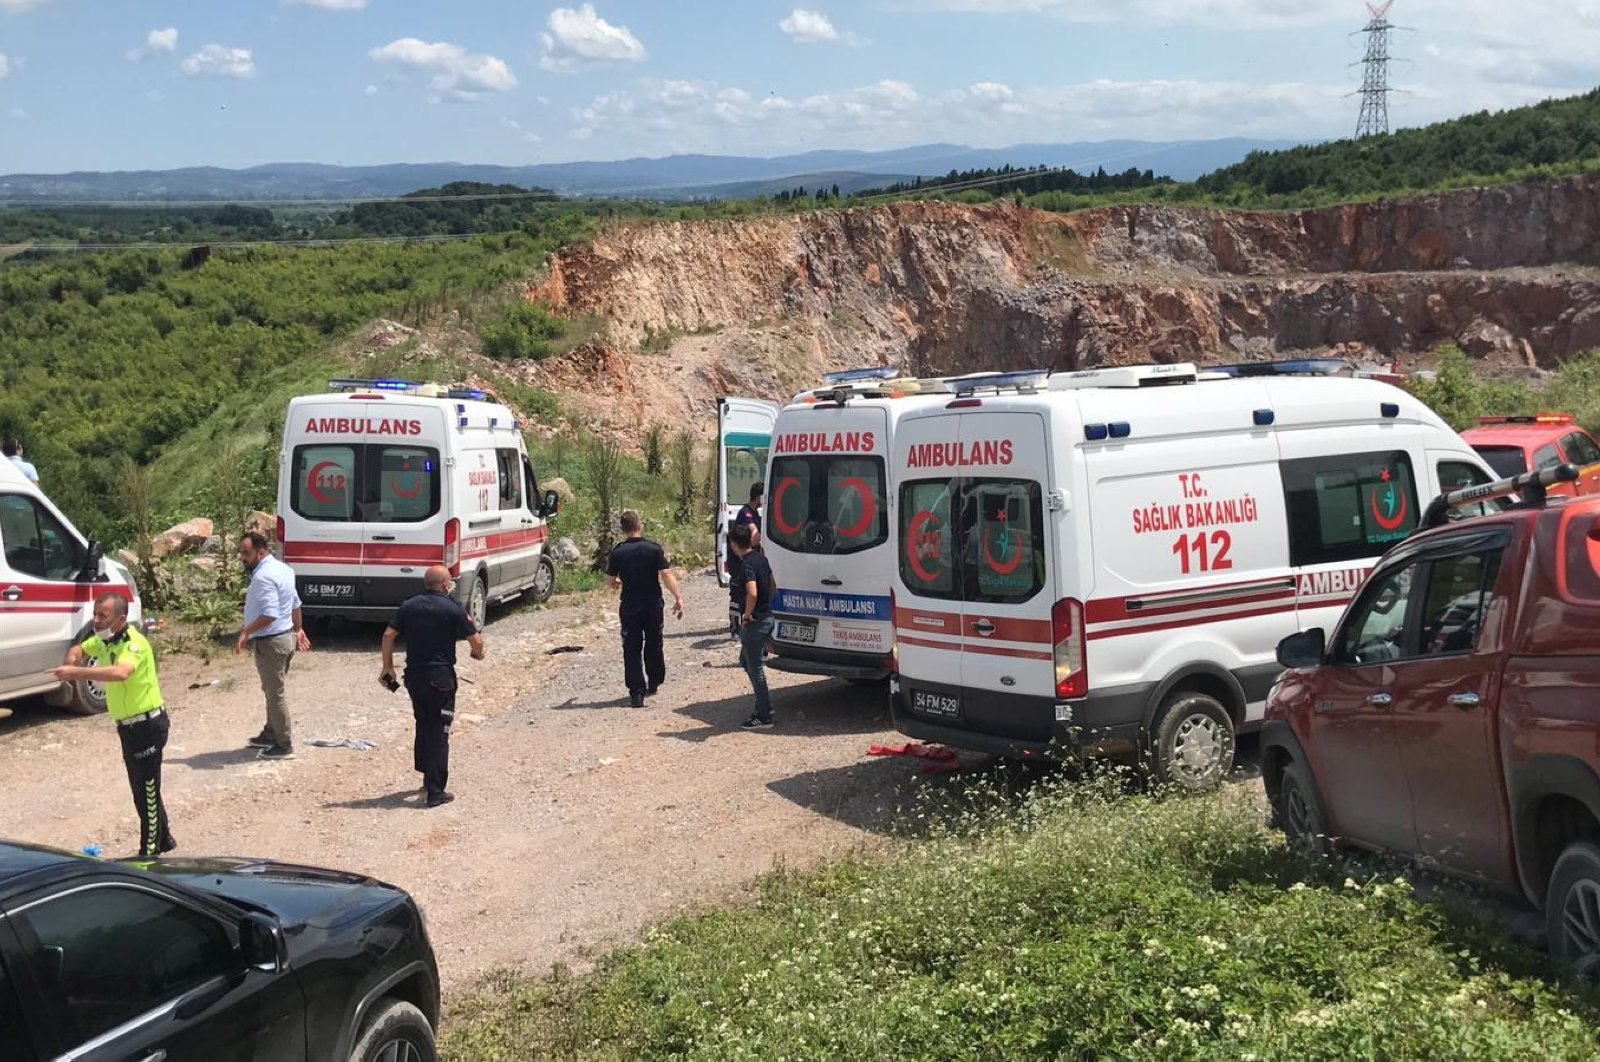 Ambulances are seen at the scene of the explosion, in Sakarya, Turkey, July 9, 2020. (IHA Photo)